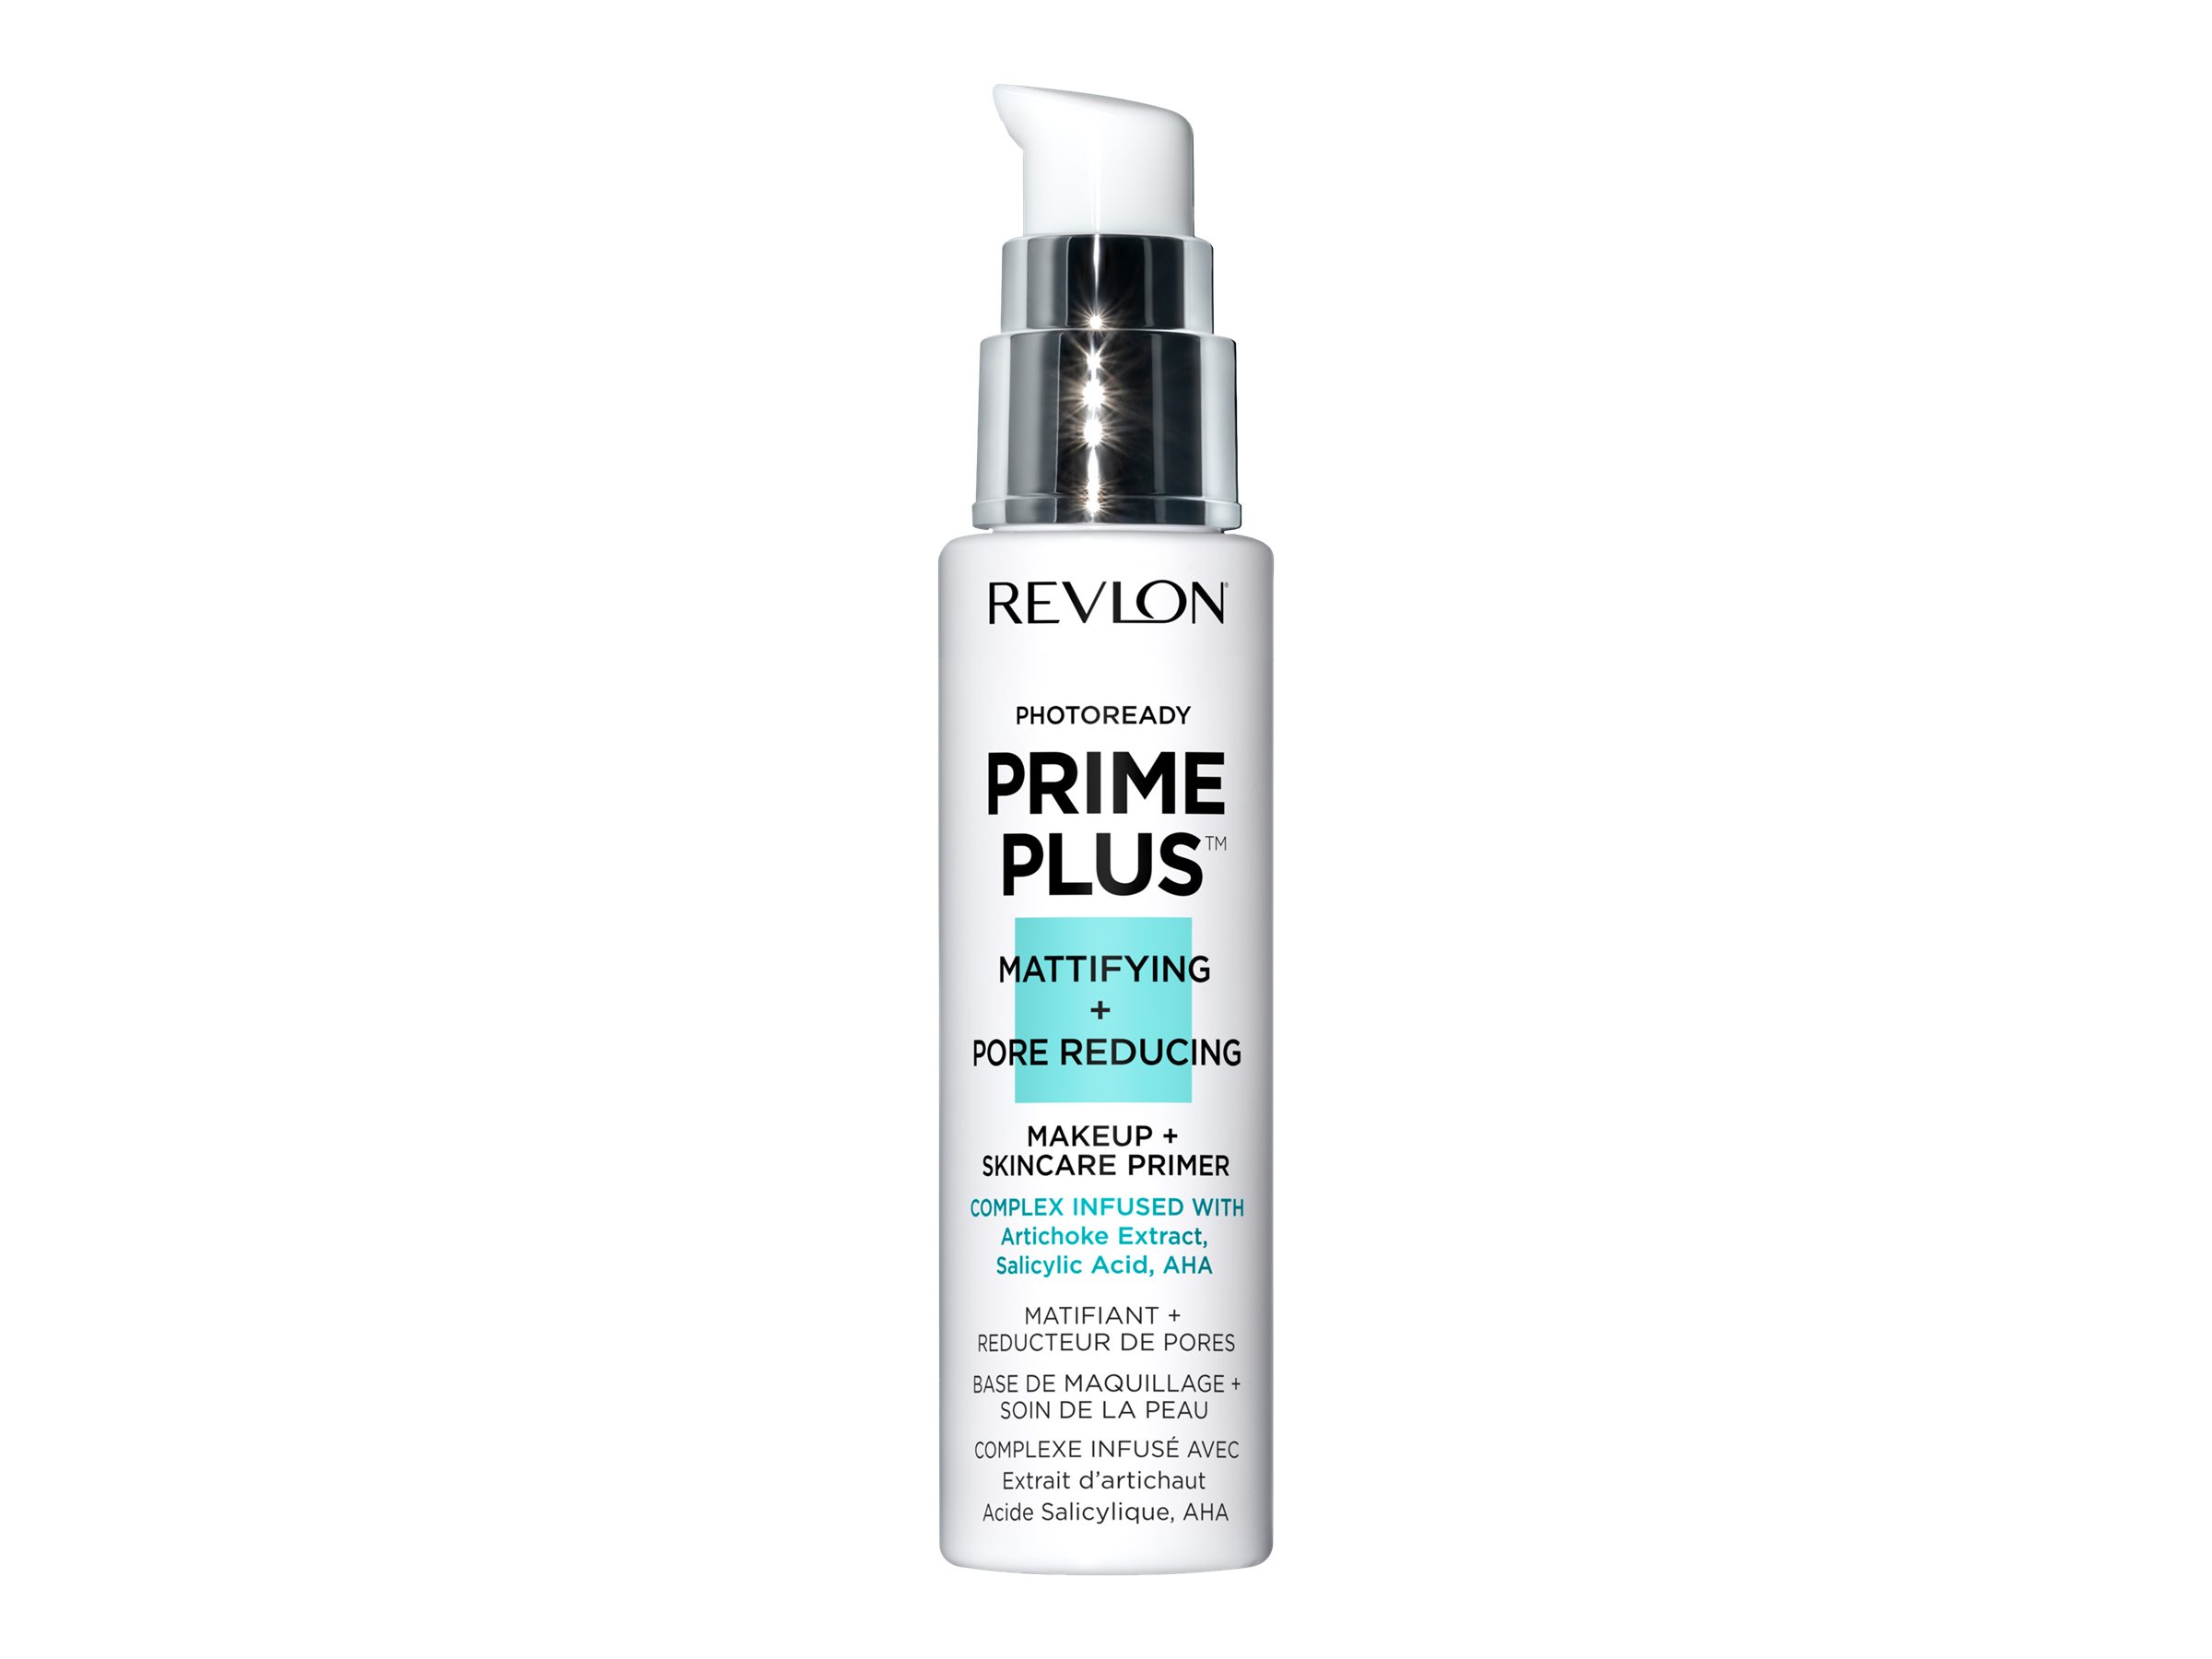 Revlon PhotoReady Prime Plus Mattifying + Pore Reducing Makeup + Skincare Primer - 30ml